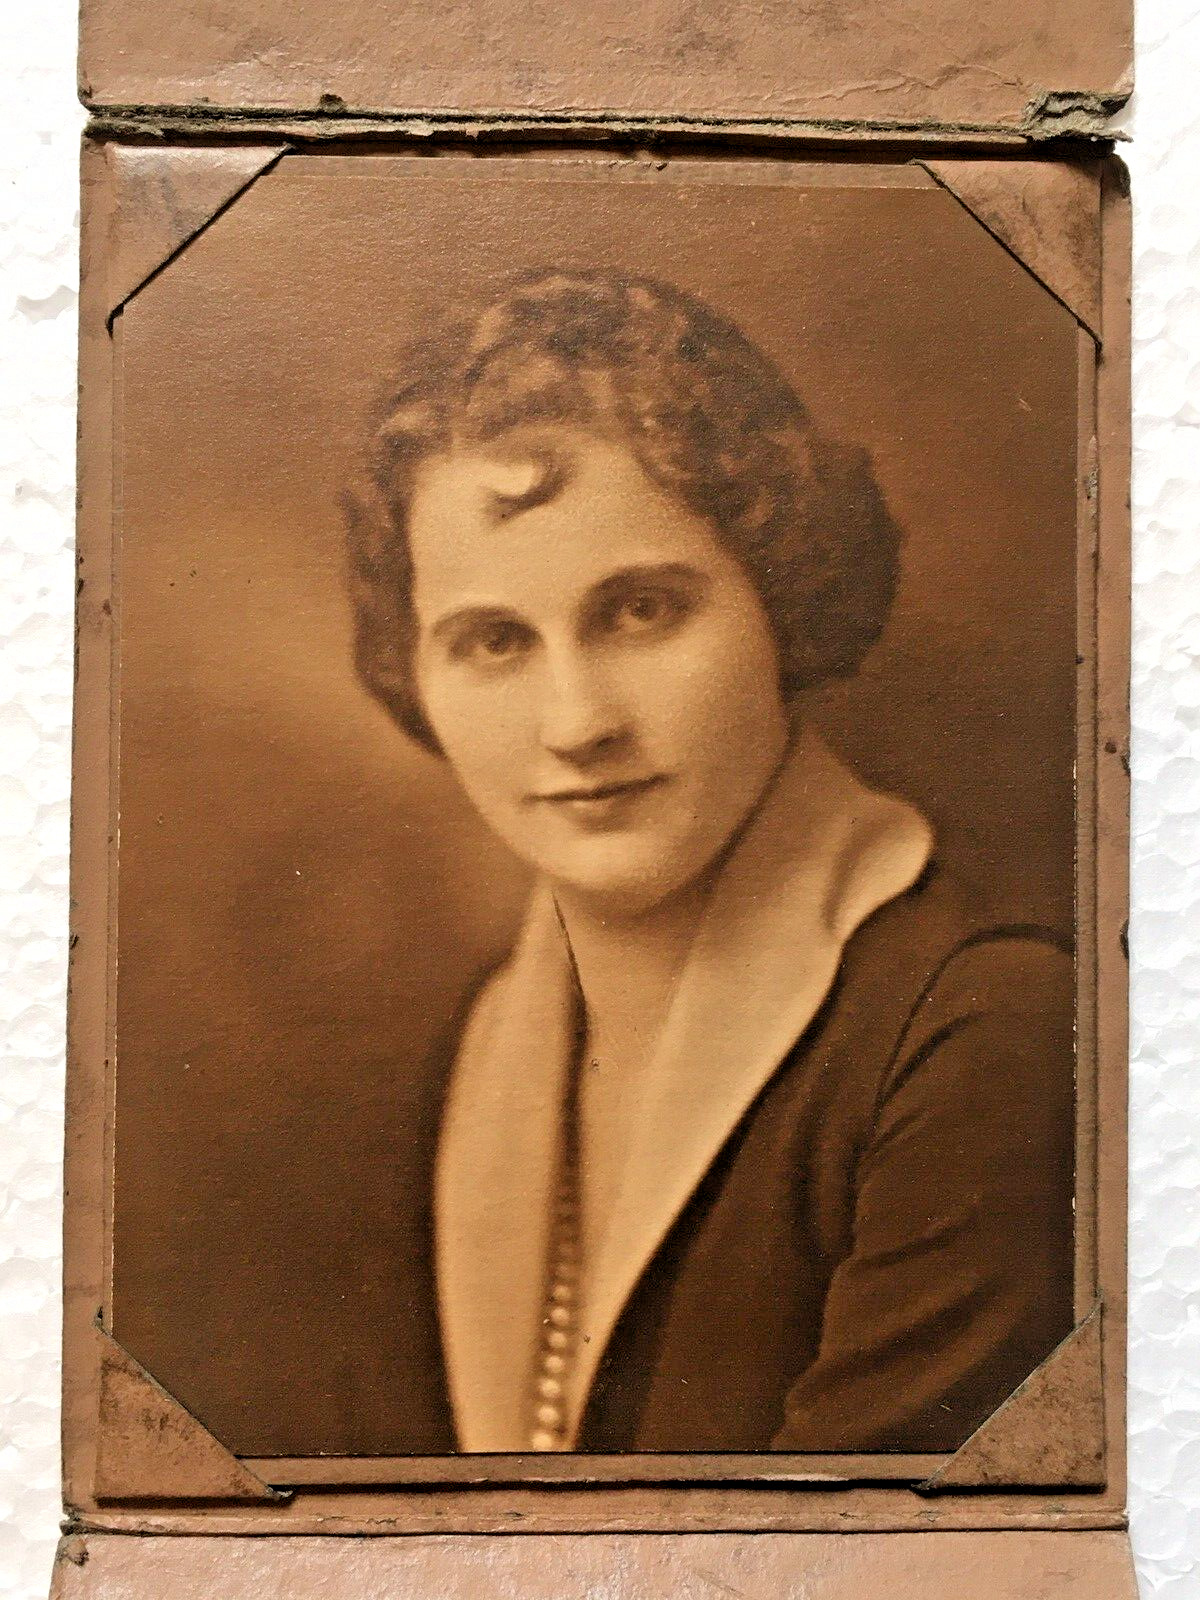 Antique Studio Portrait Photo Woman Mysterious Gaze Pearls Sepia Tone Maryland